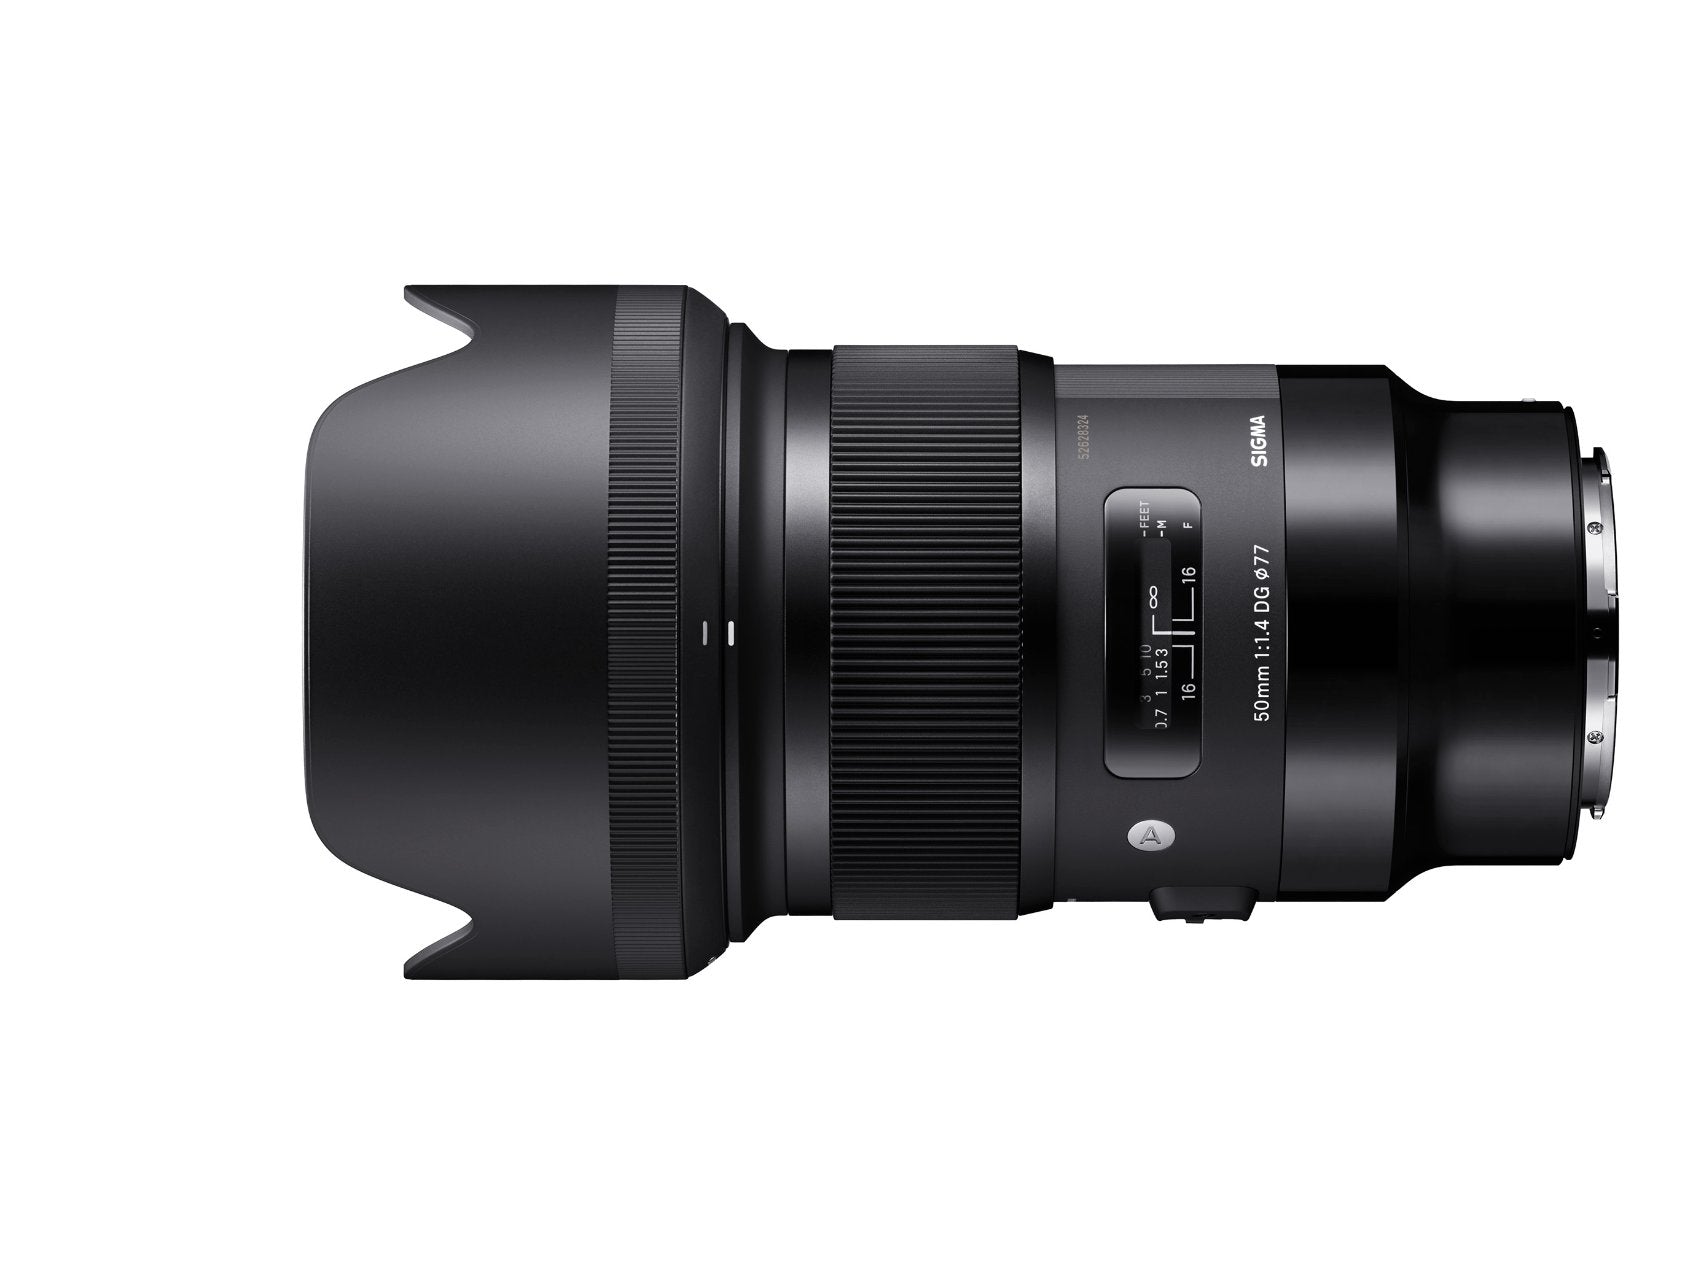 Sigma 50mm F1.4 DG HSM Art lens - Nikon F